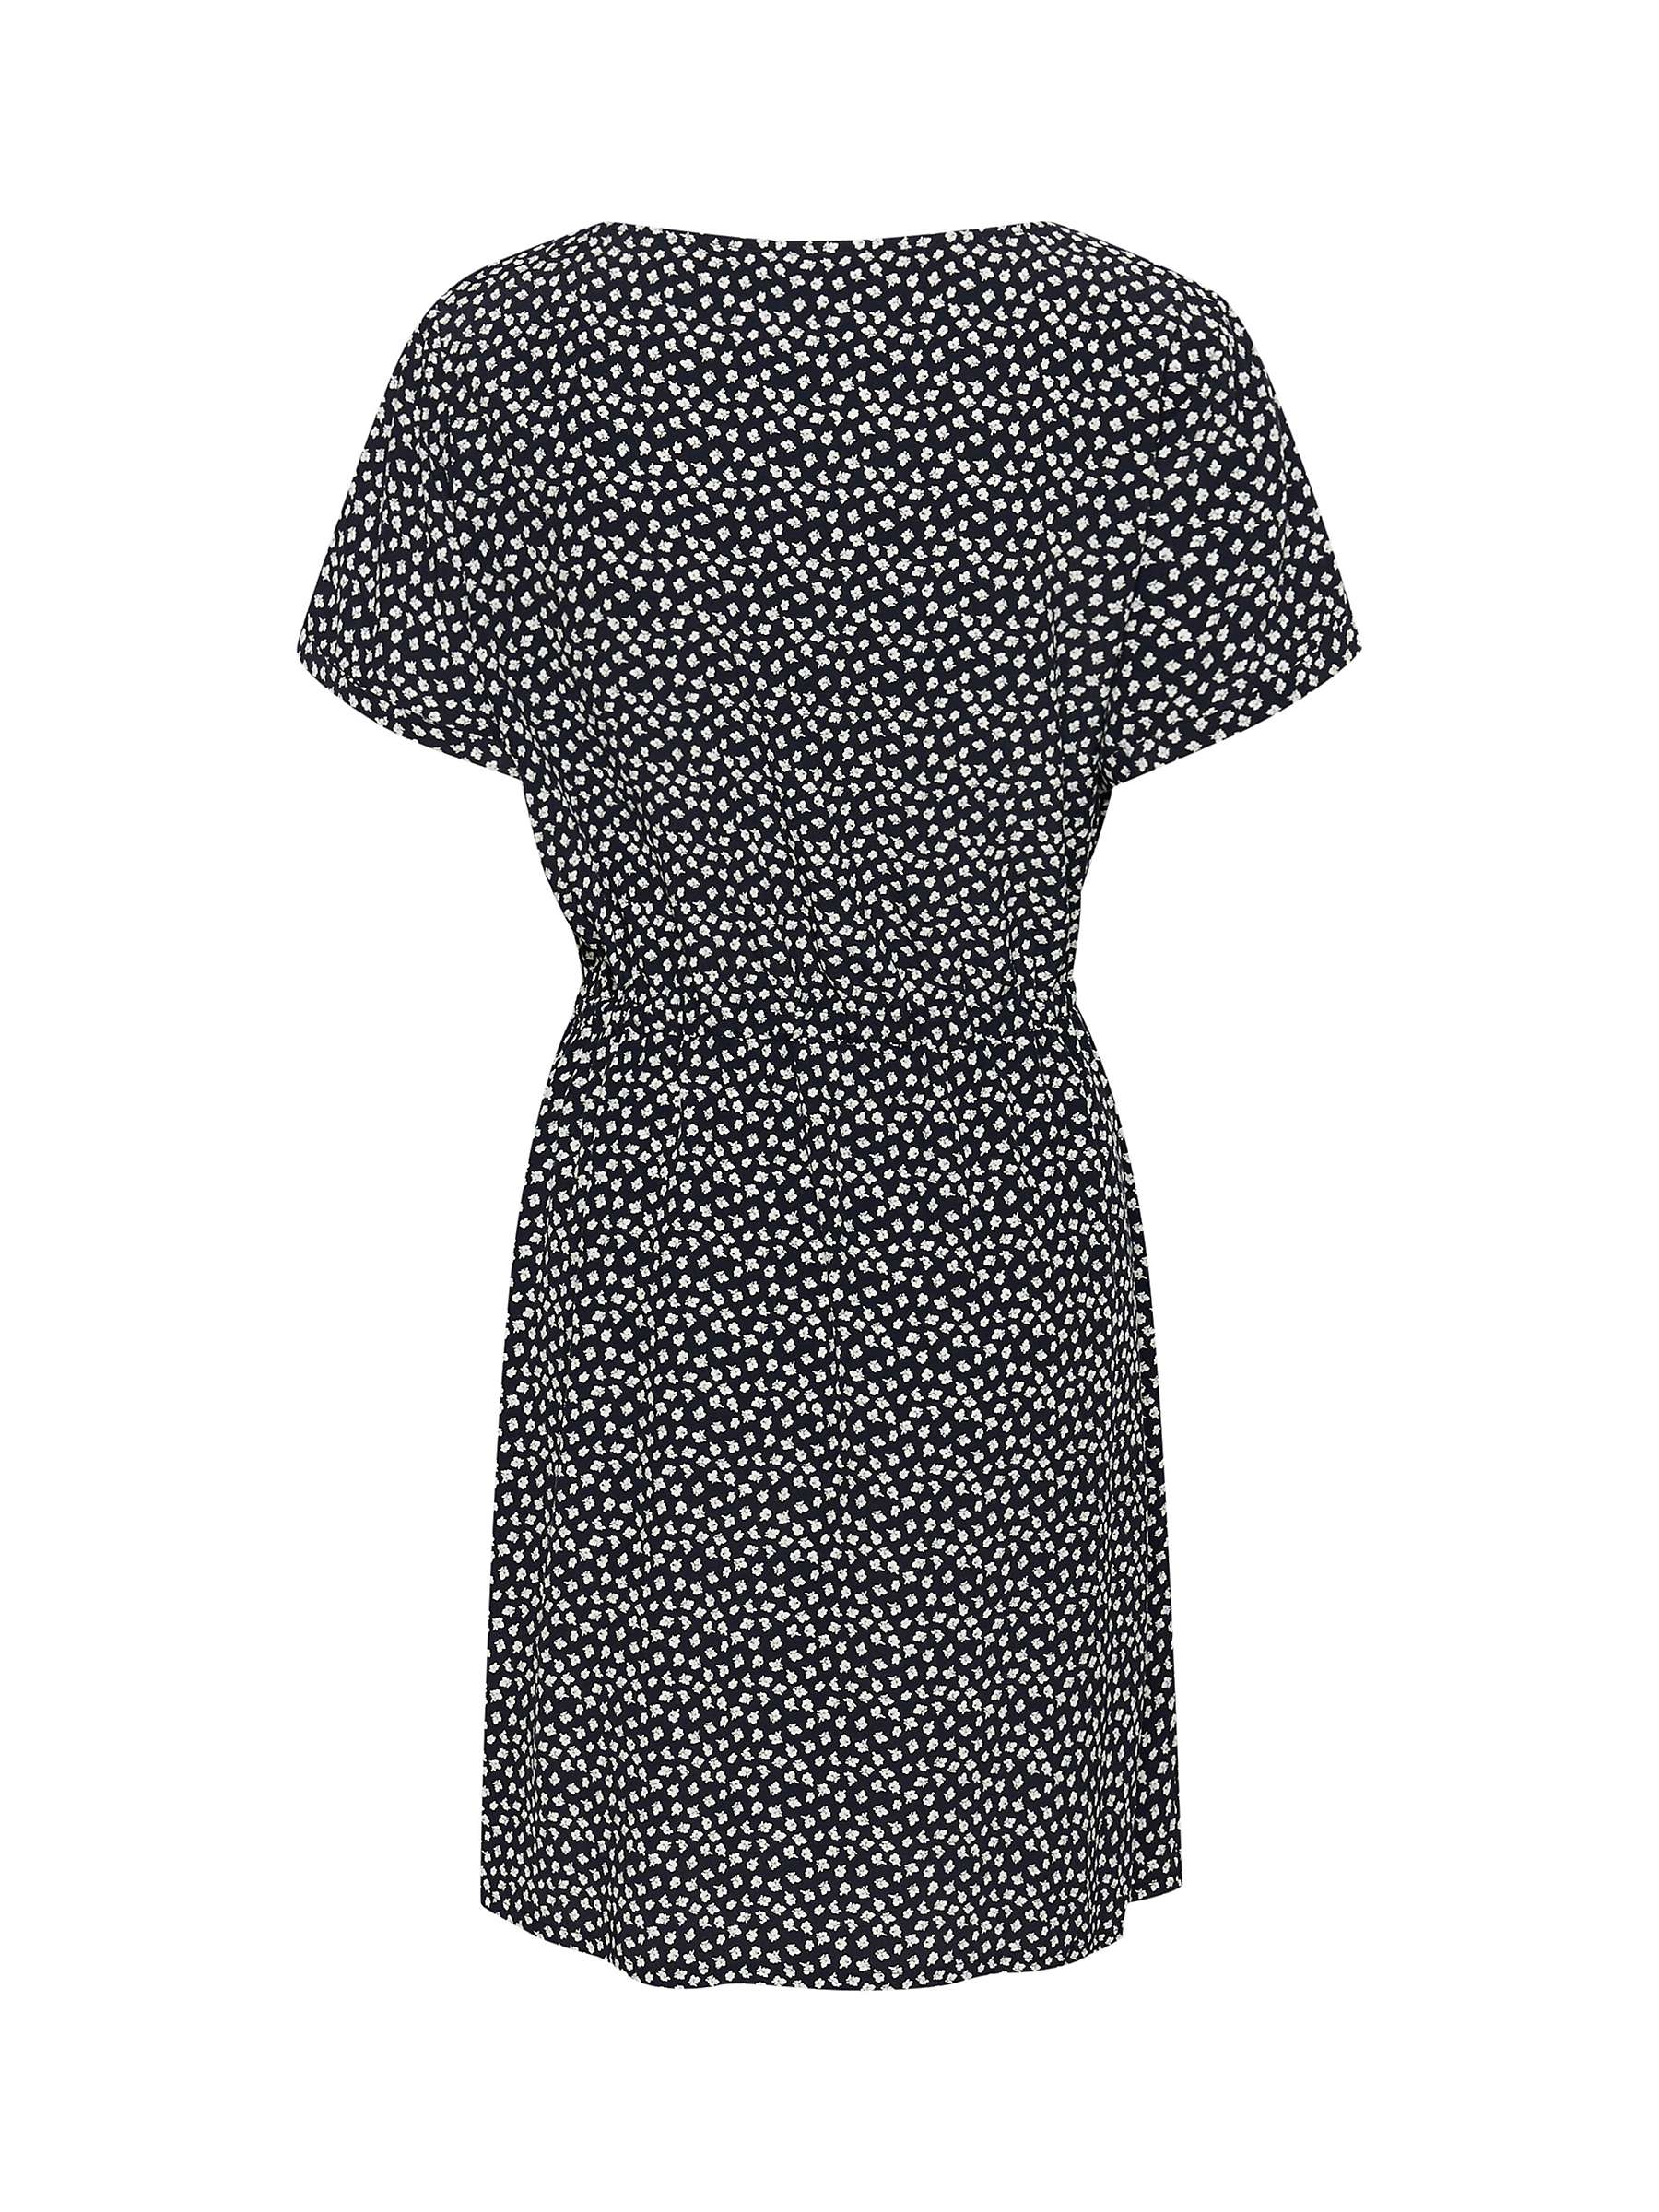 Buy Saint Tropez Zanni Short Sleeve Round Neck Dress, Nightsky Online at johnlewis.com